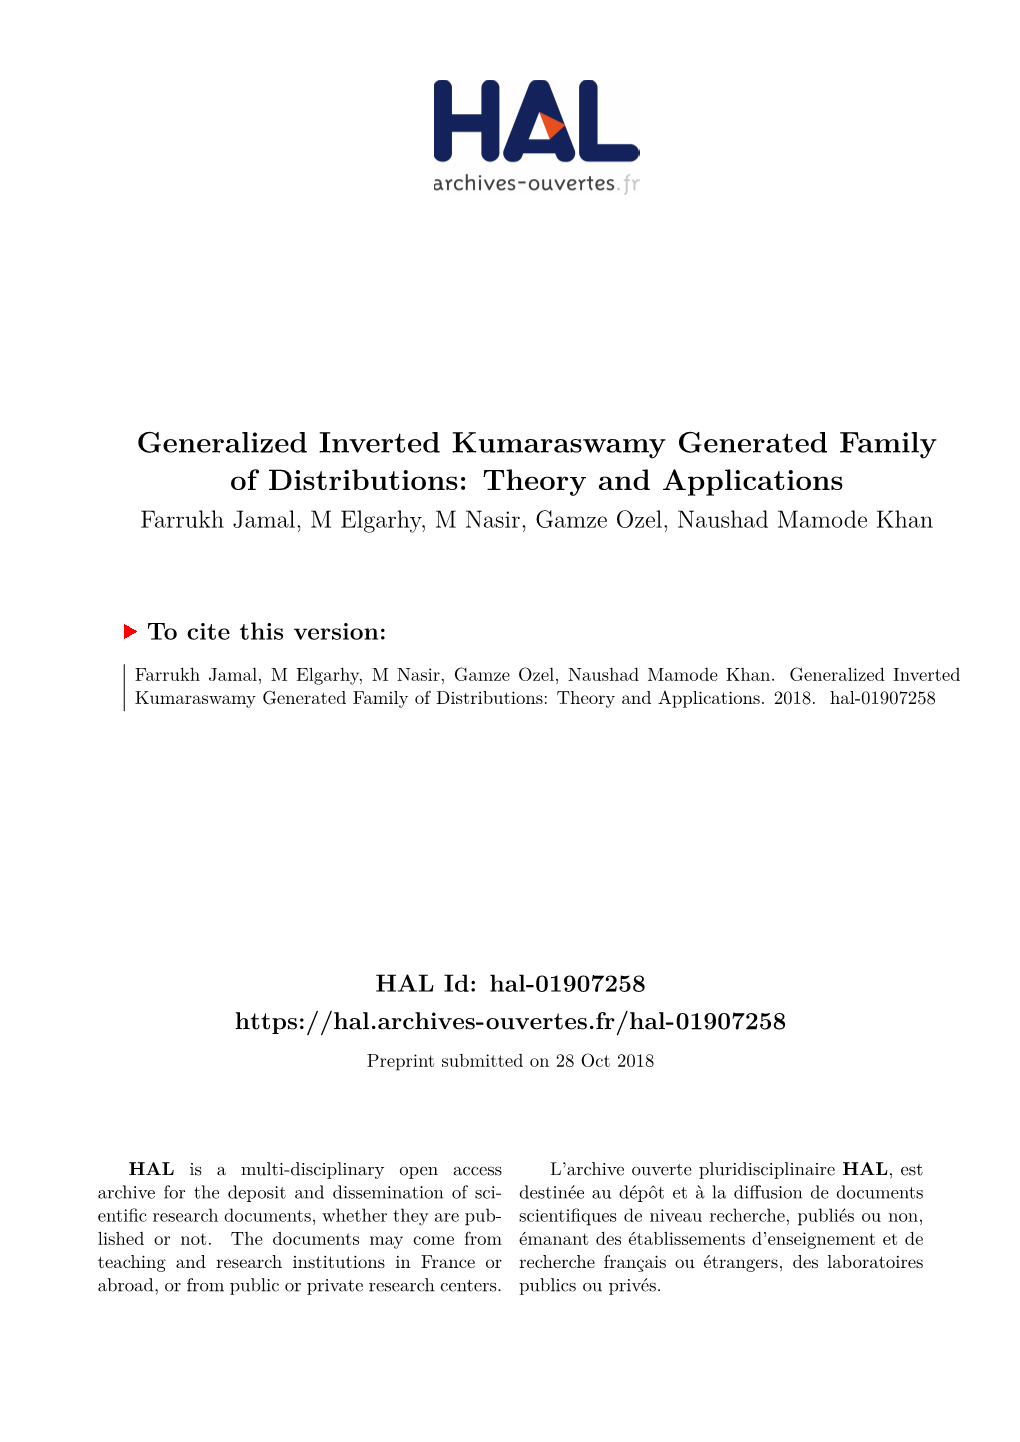 Generalized Inverted Kumaraswamy Generated Family of Distributions: Theory and Applications Farrukh Jamal, M Elgarhy, M Nasir, Gamze Ozel, Naushad Mamode Khan